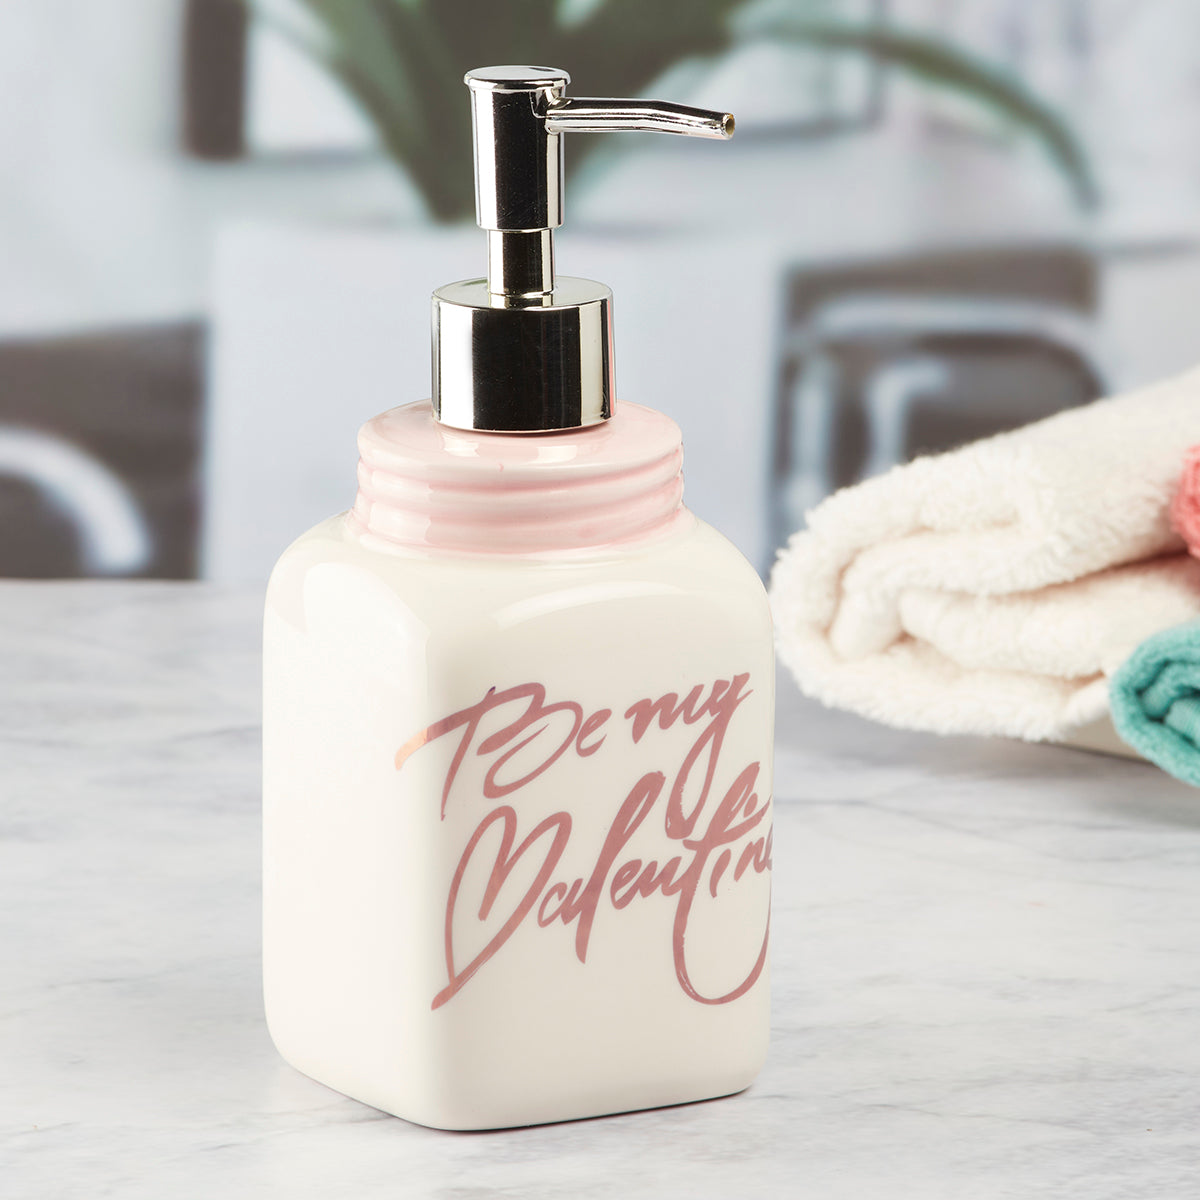 Ceramic Soap Dispenser handwash Pump for Bathroom, Set of 1, White/Pink (9648)